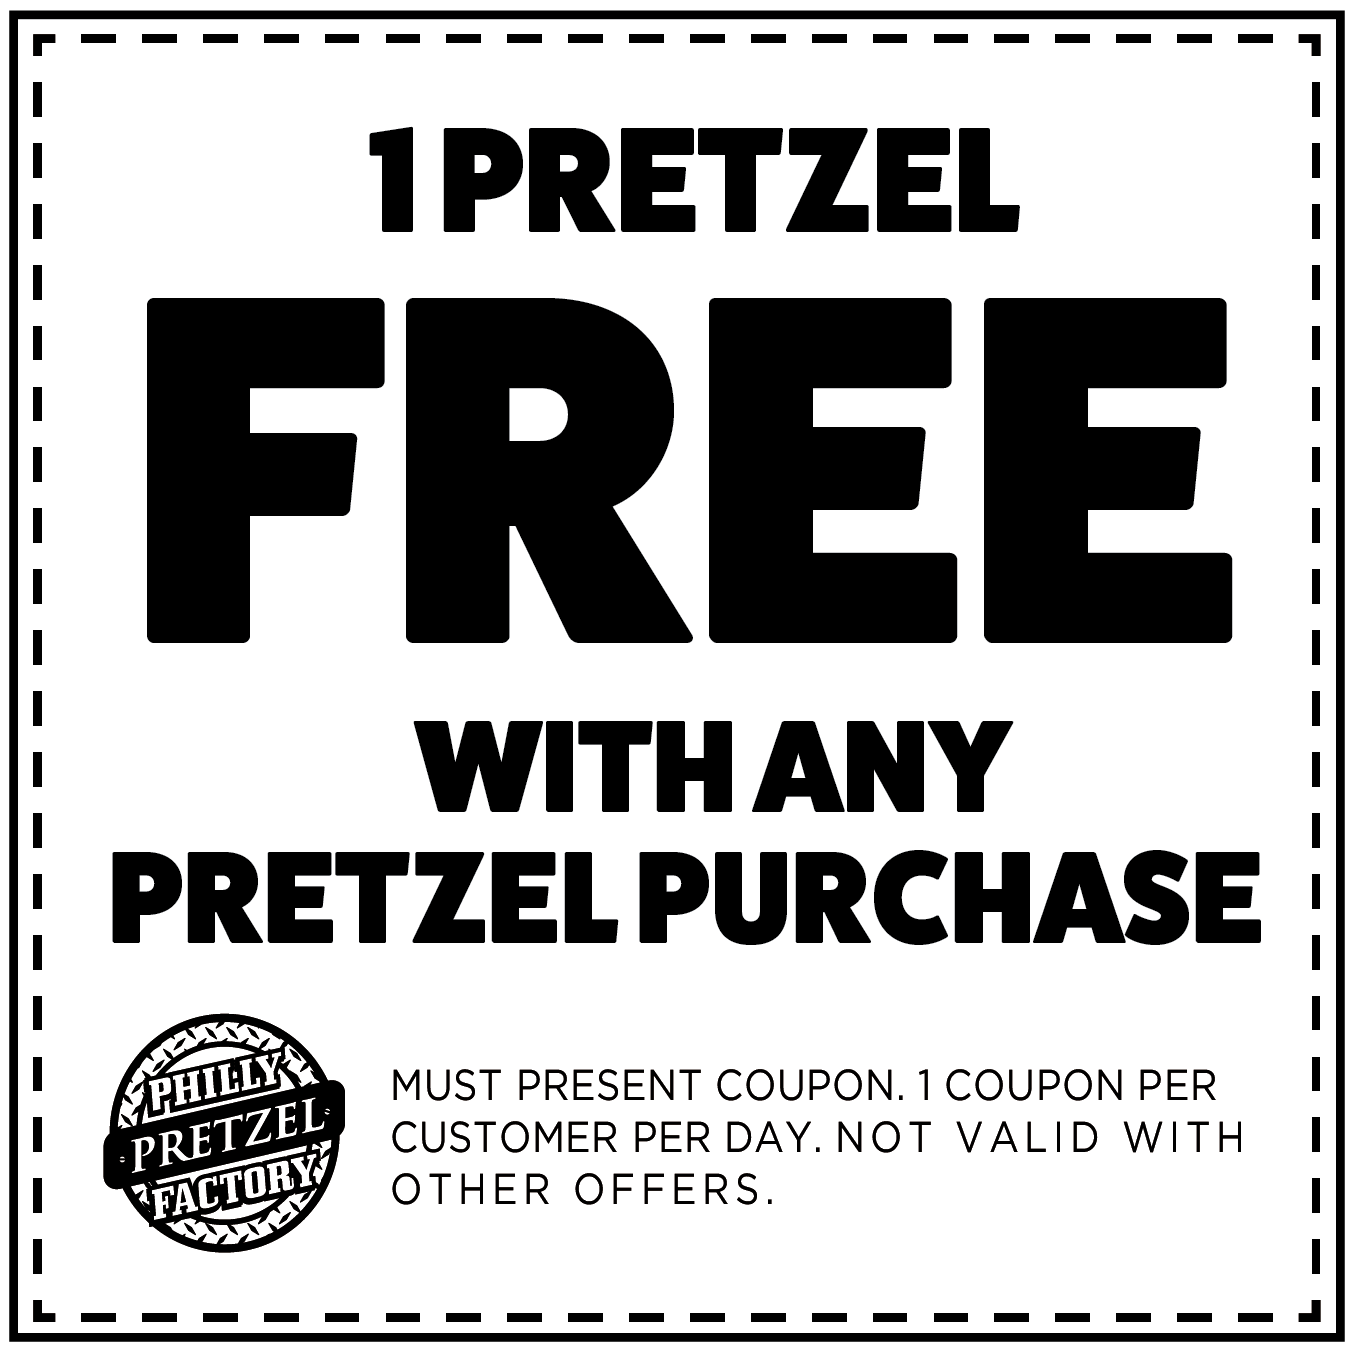 1 Pretzel Free with Any Pretzel Purchase